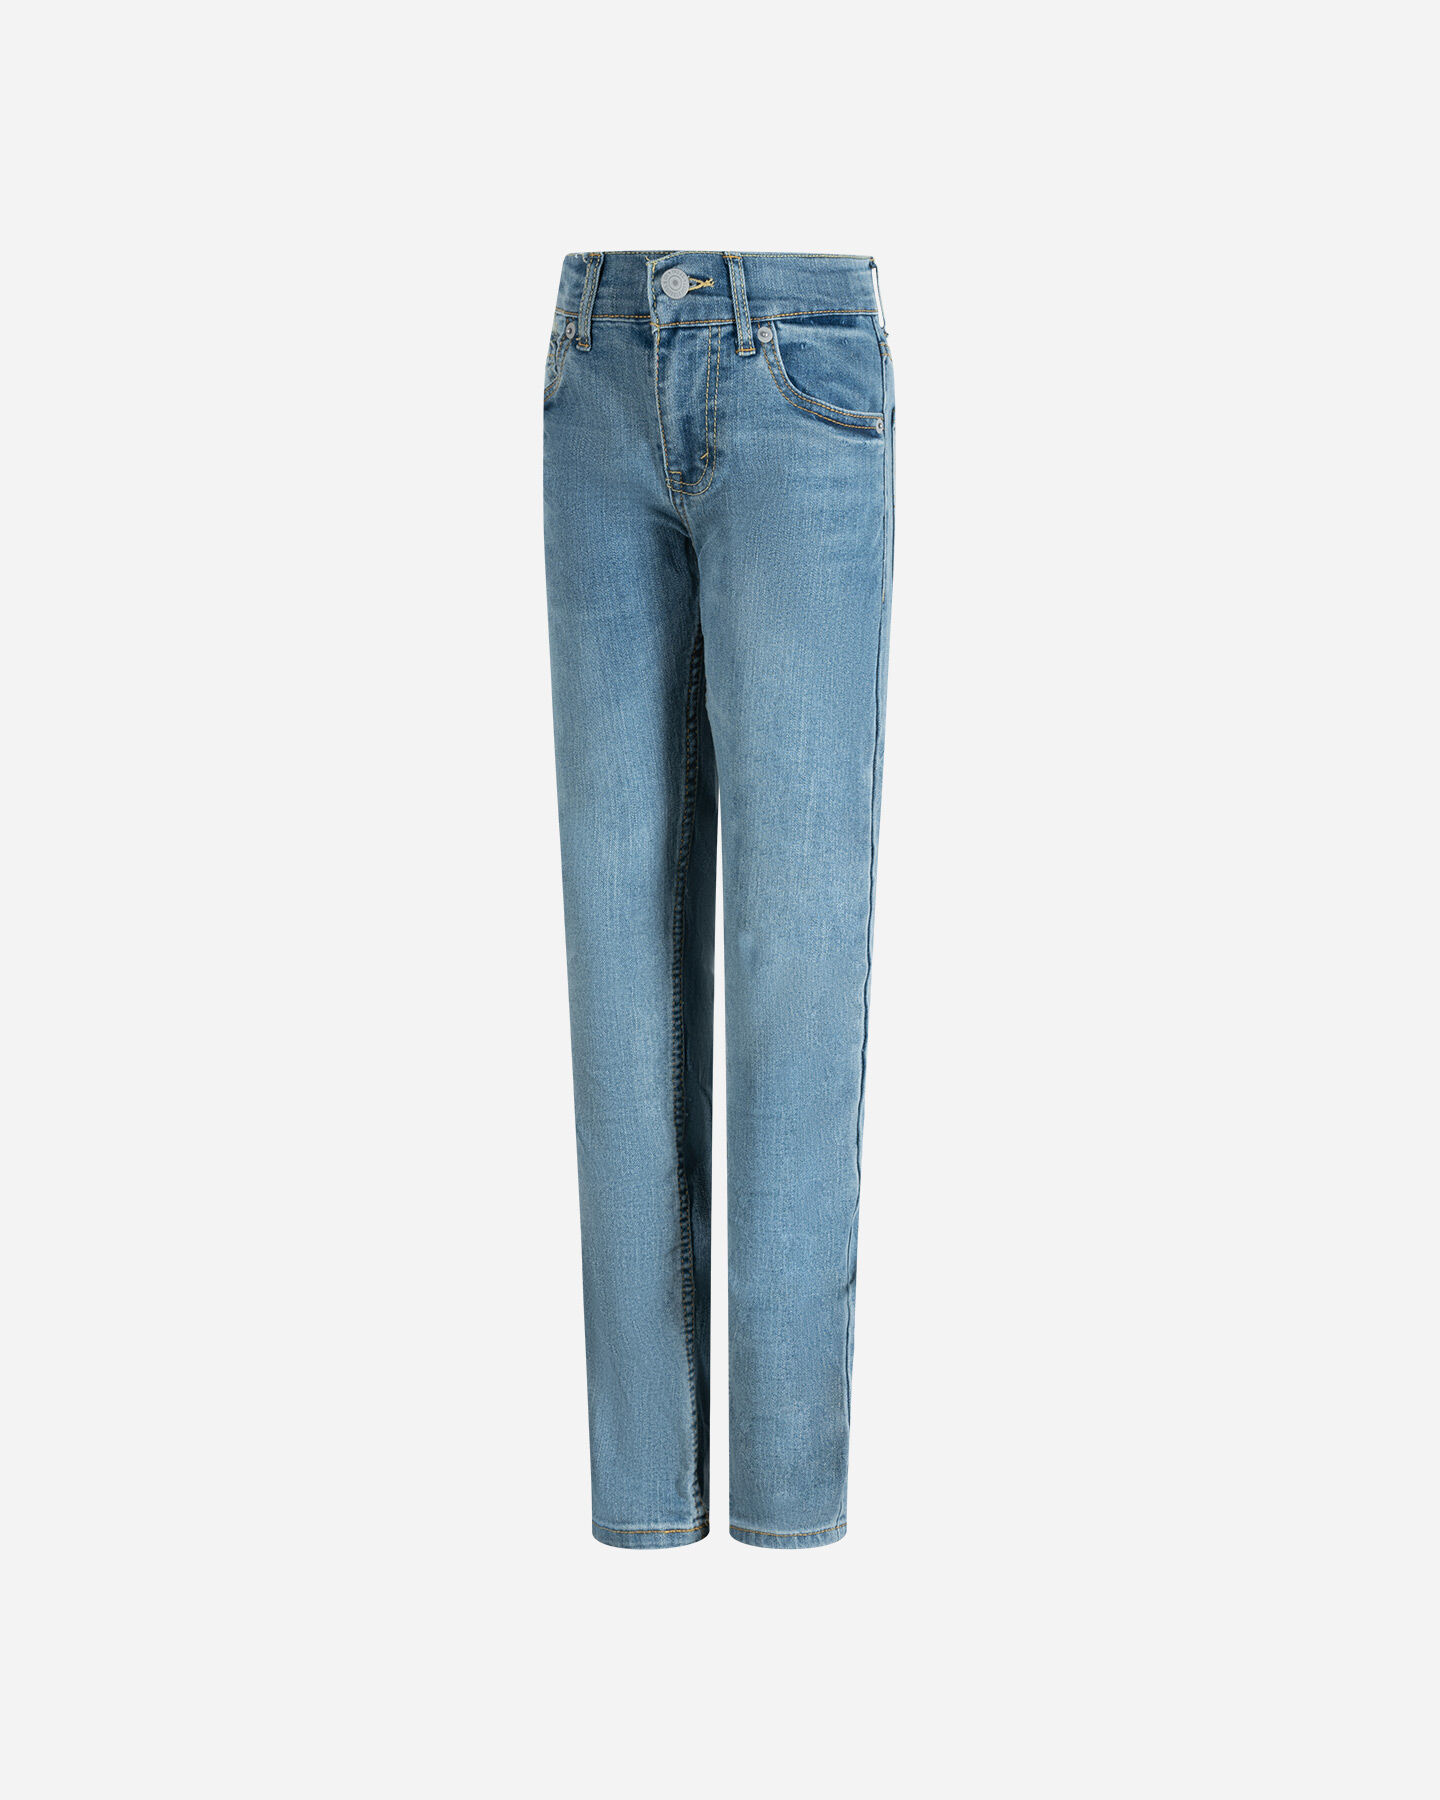  Jeans LEVI'S 510 SKINNY FIT JR S4126687|L5D|10 scatto 0